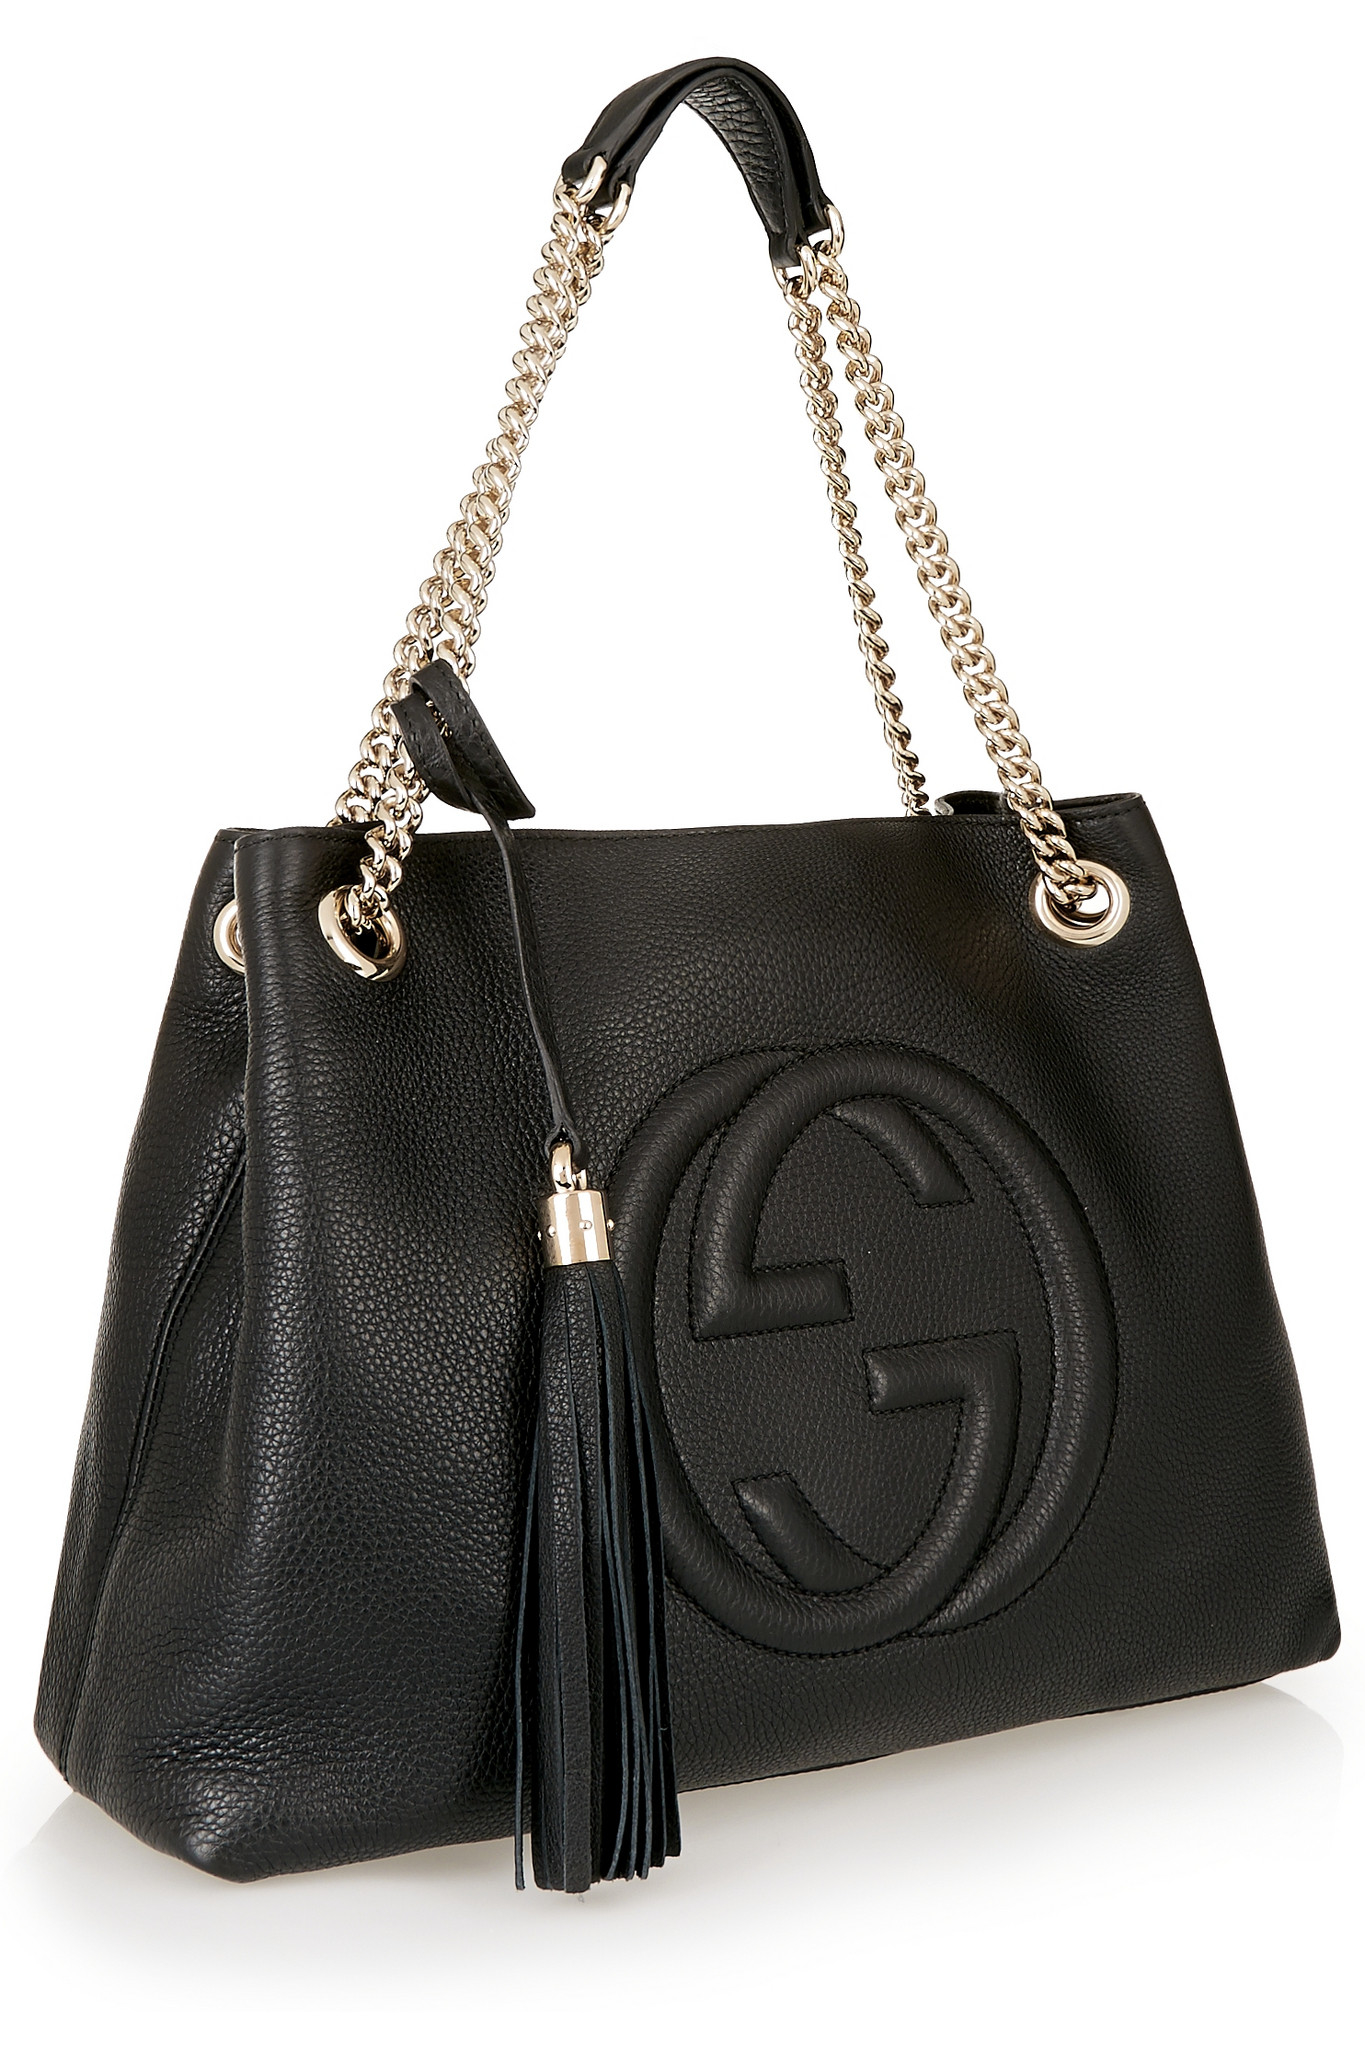 Lyst - Gucci Soho Medium Textured-leather Shoulder Bag in Black